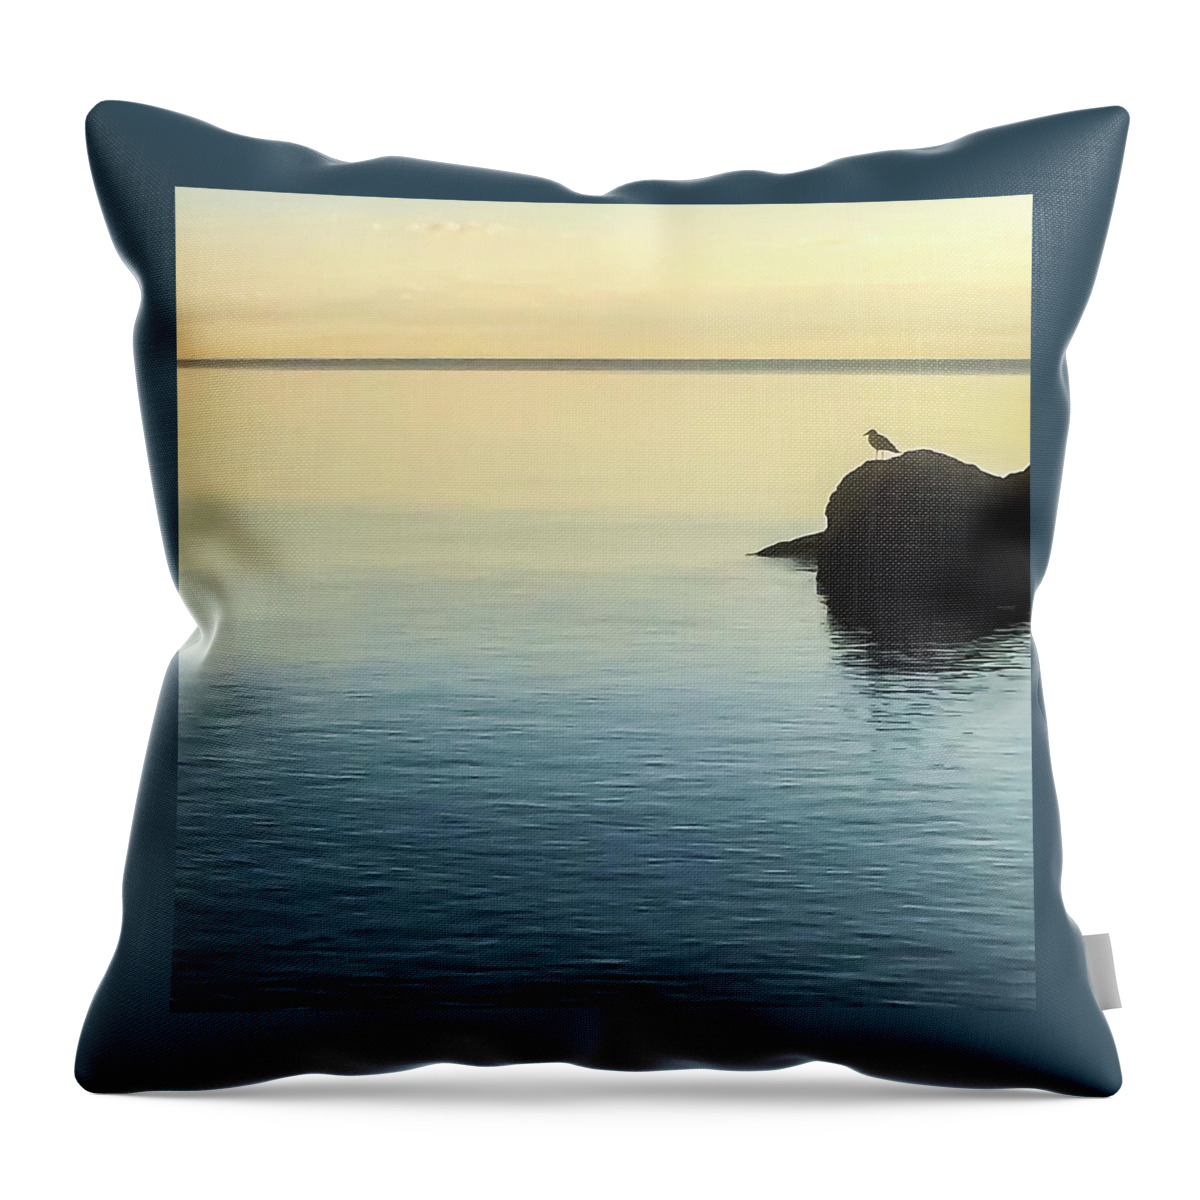 Sunrise Throw Pillow featuring the photograph Lone Gull by Terri Hart-Ellis